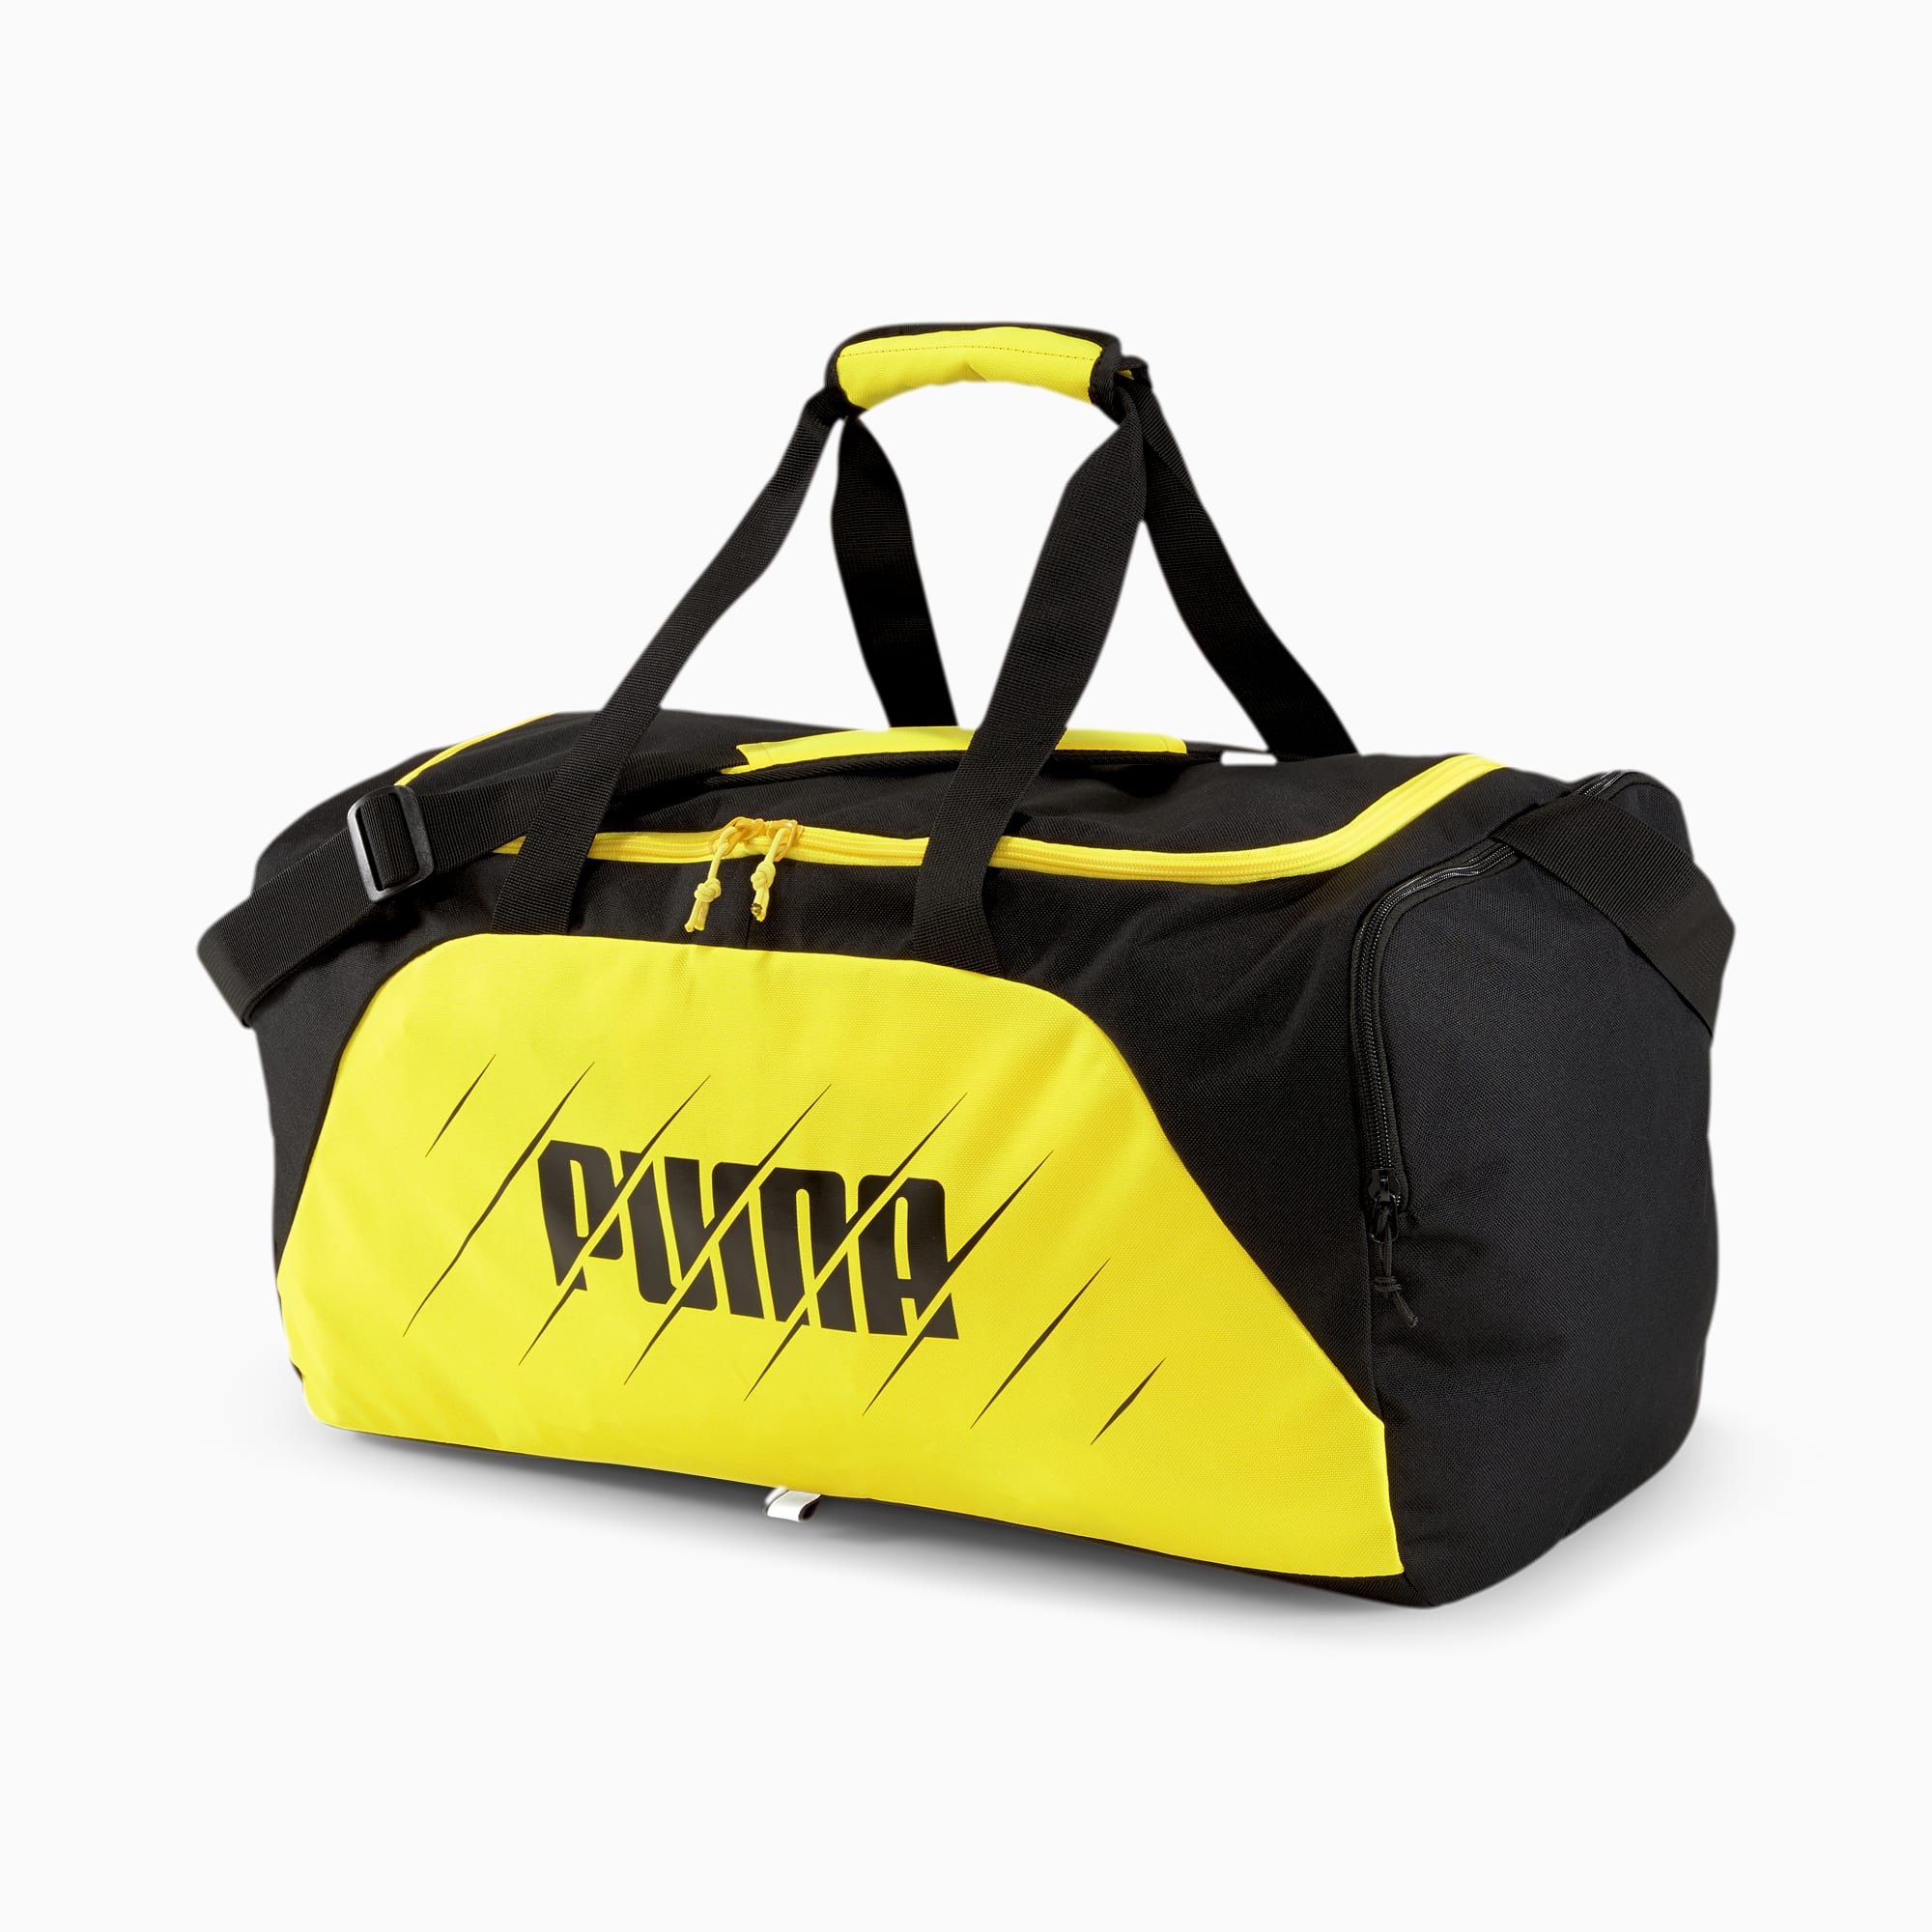 puma yellow bag